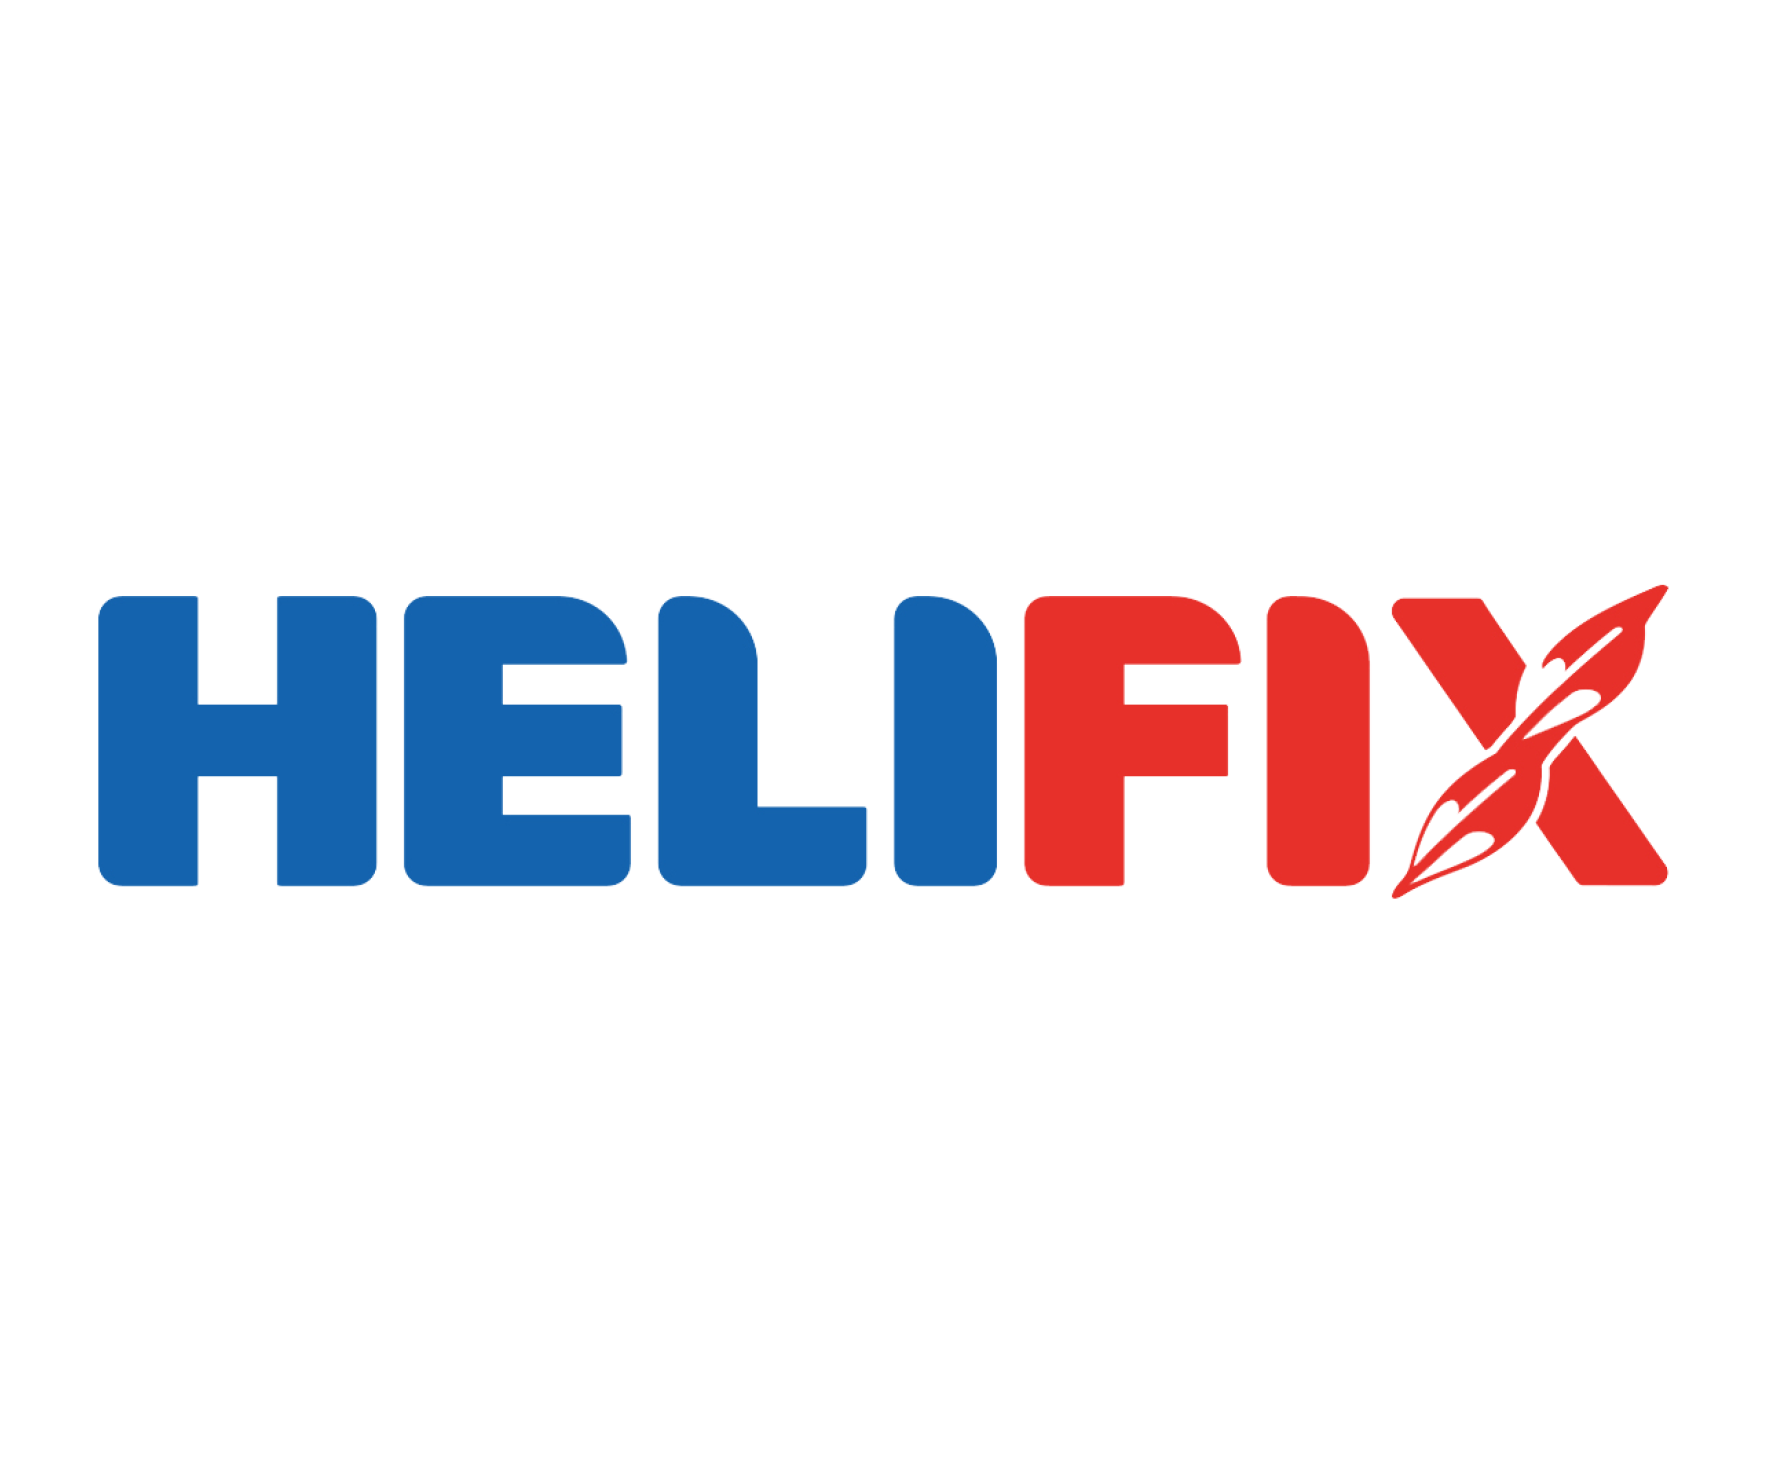 helifix logo